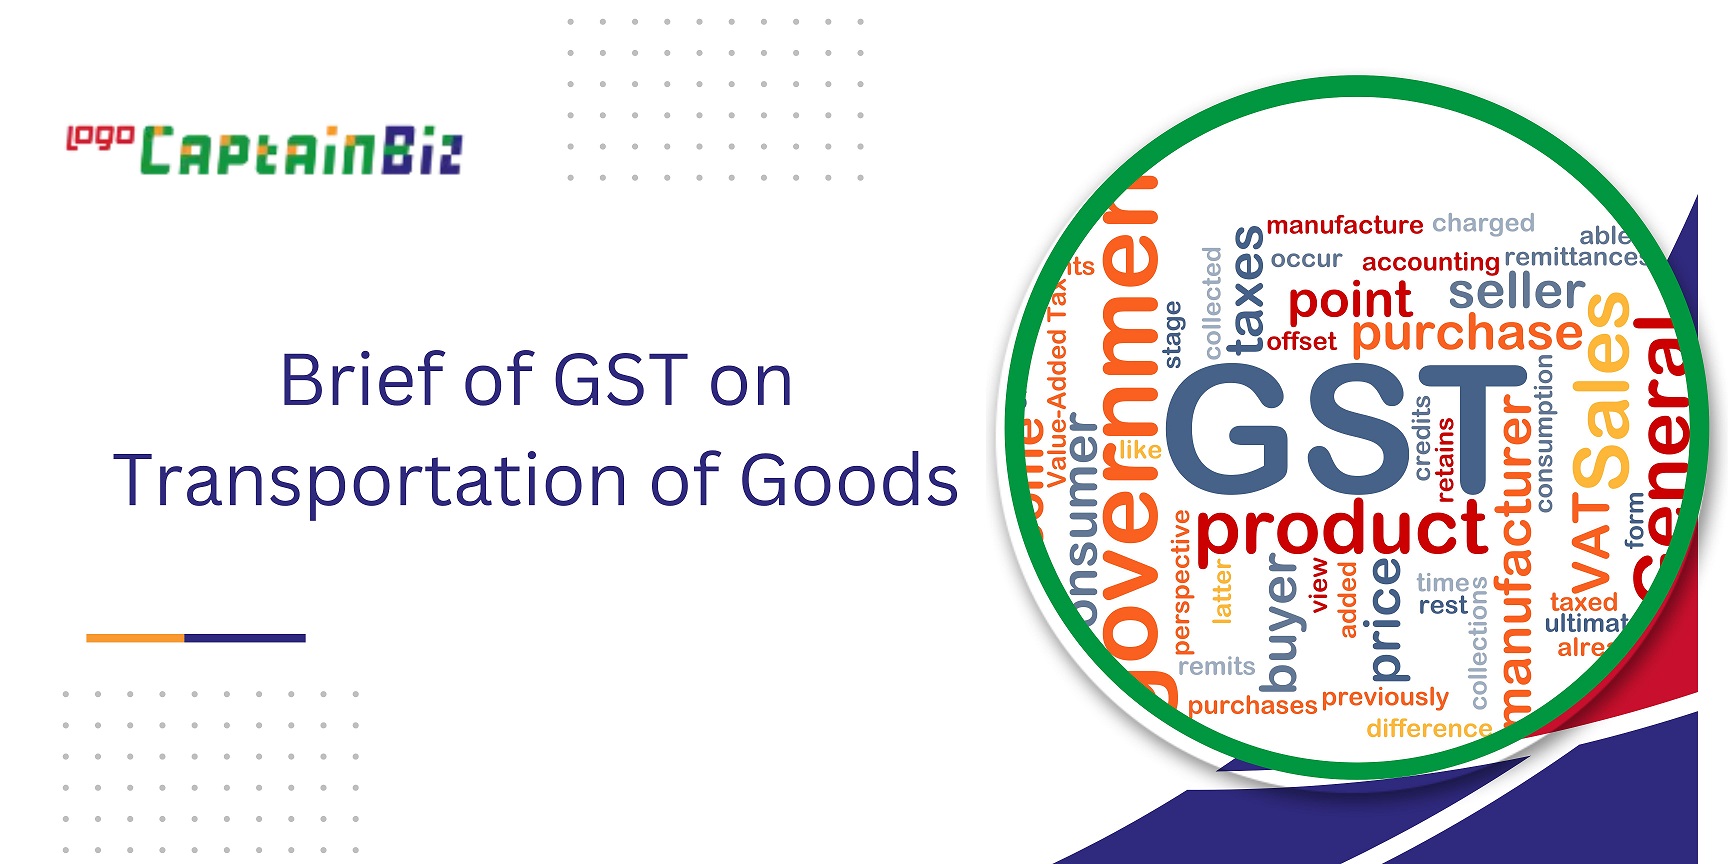 CaptainBiz: Brief of GST on Transportation of Goods